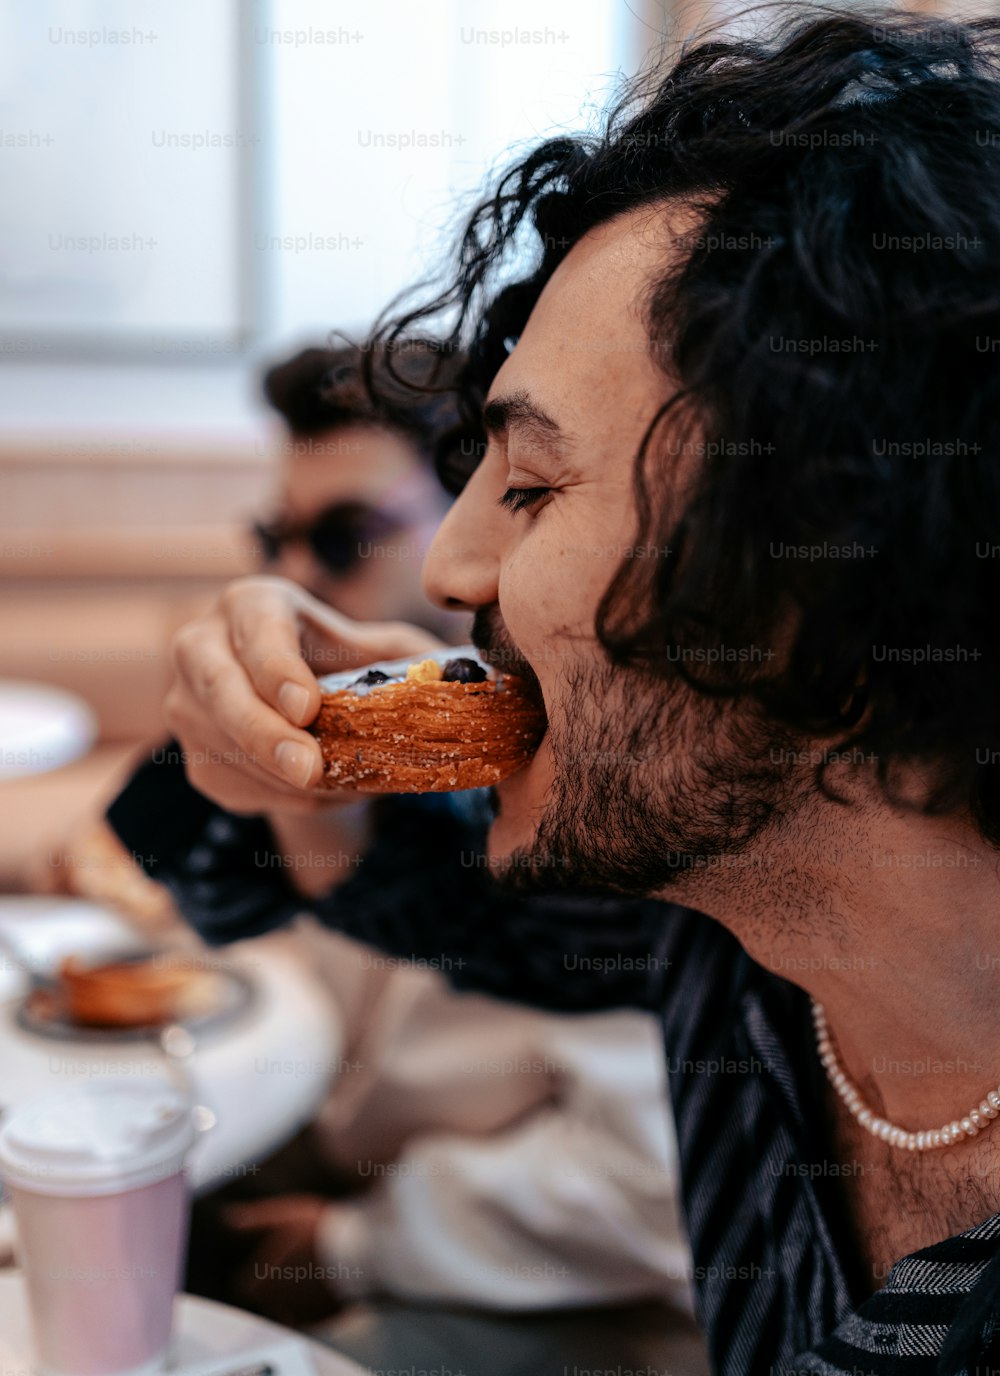 a man with long hair eating a doughnut